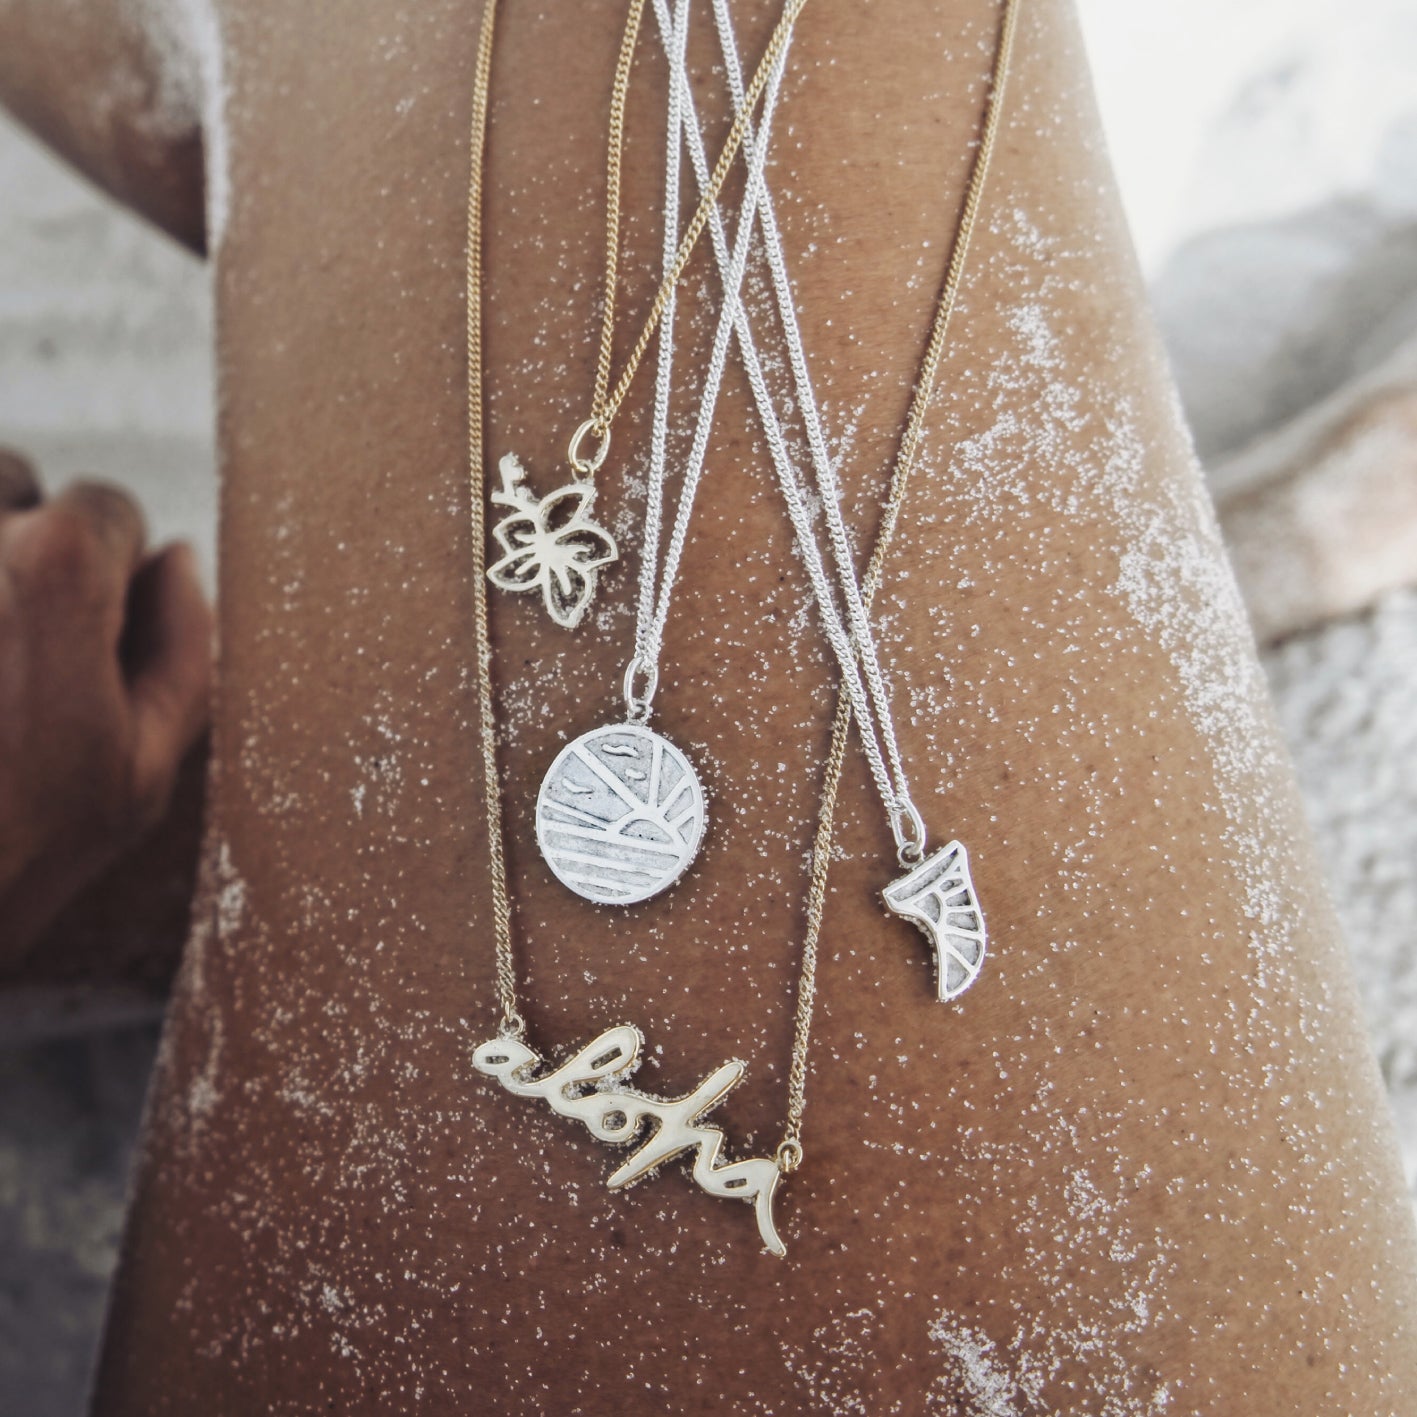 La Luna Rose Collaboration Necklace wit hGoldfish Kiss Blogger - Surf Fin Charm in Silver